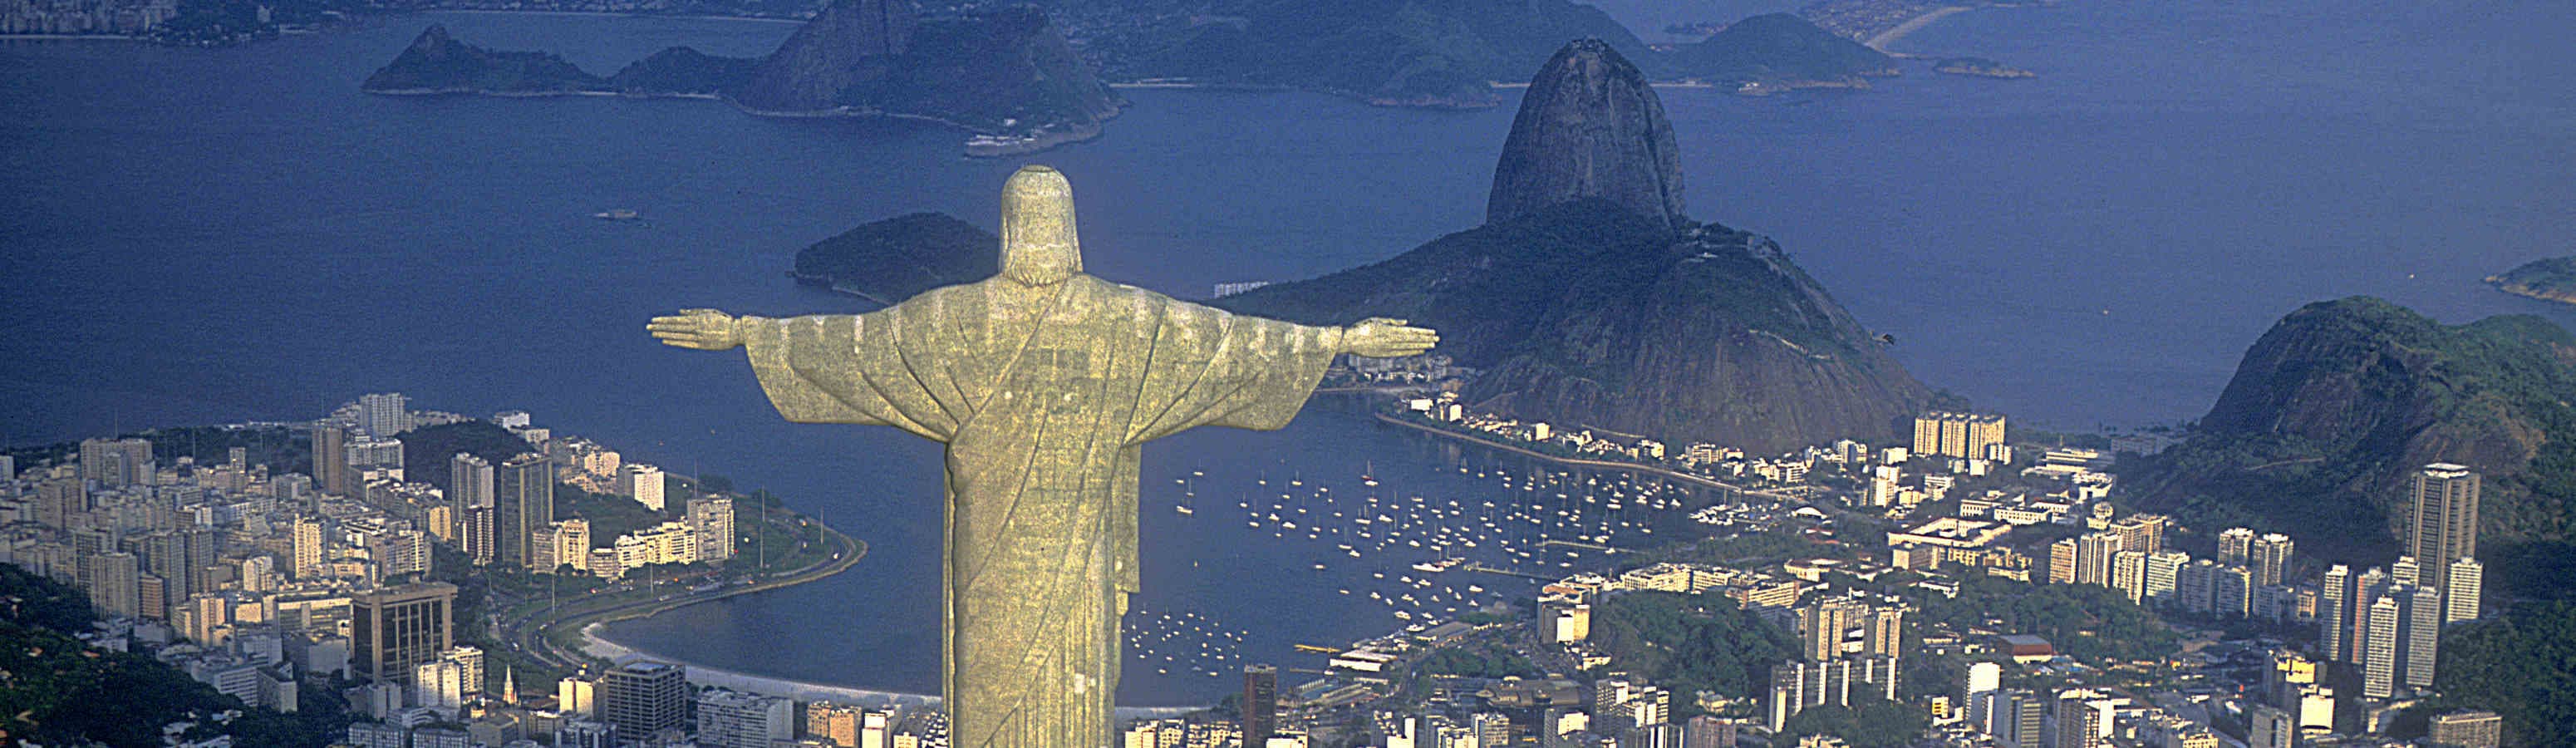 Suggerimenti per i viaggi in Brasile